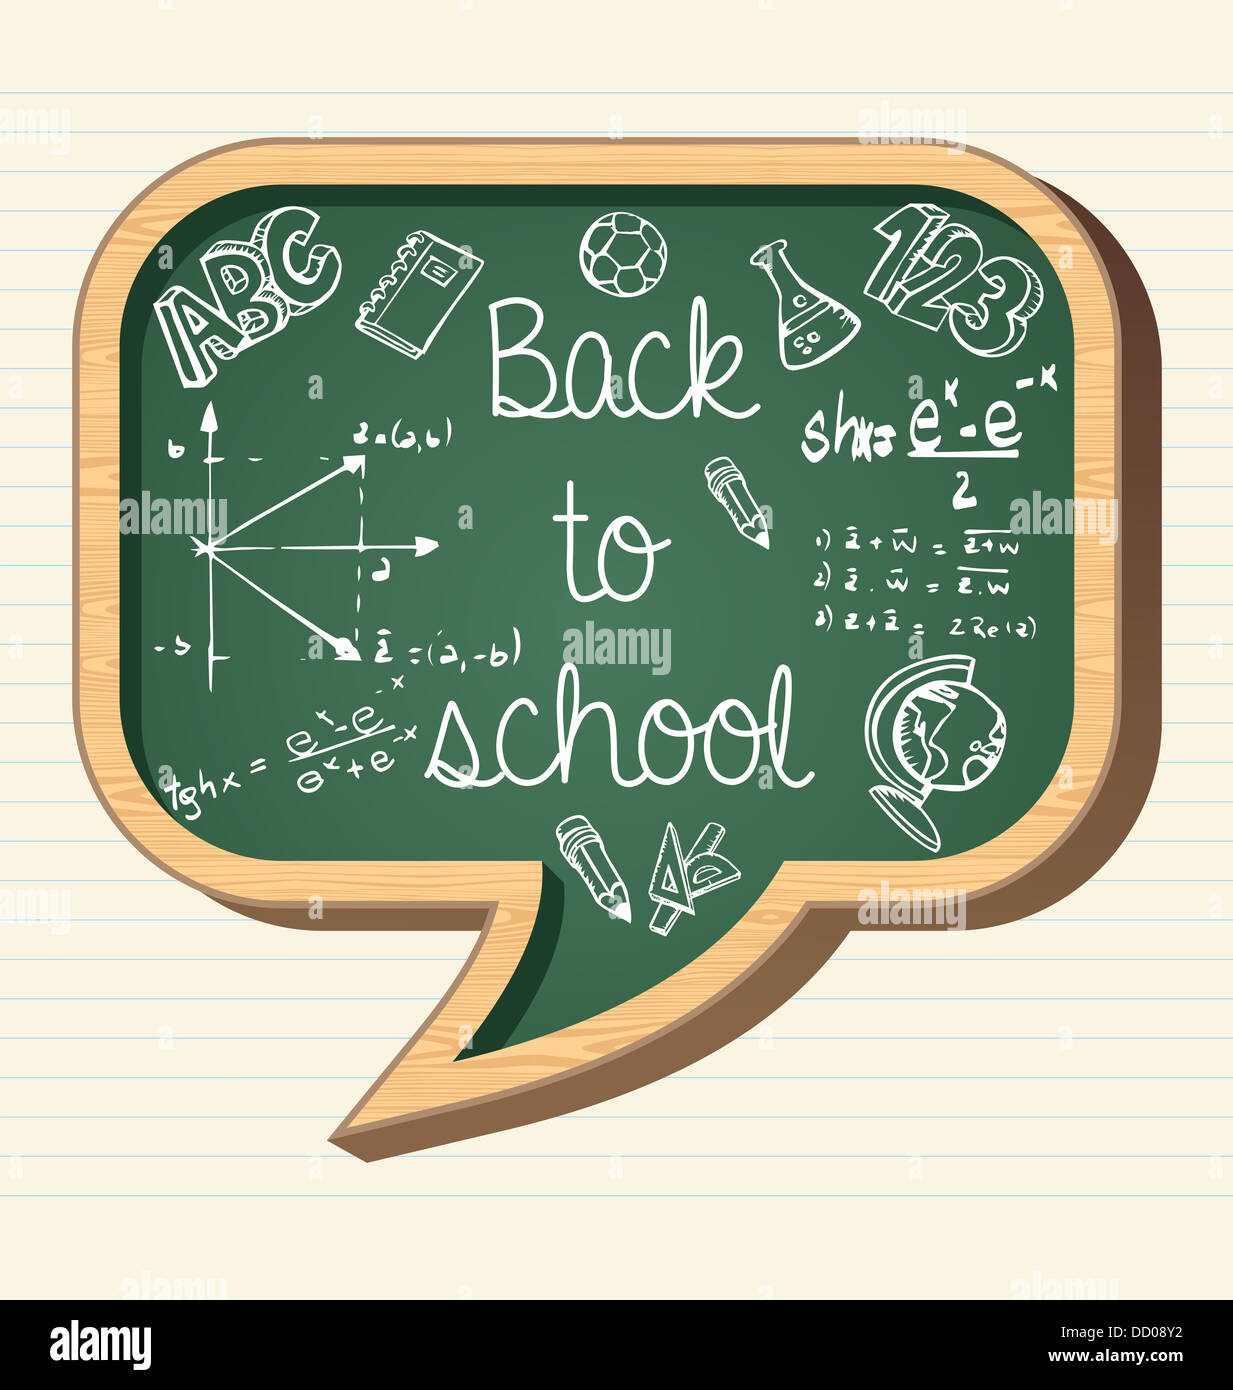 Back to school wooden chalkboard social media speech bubble icon, education elements illustration. Stock Photo